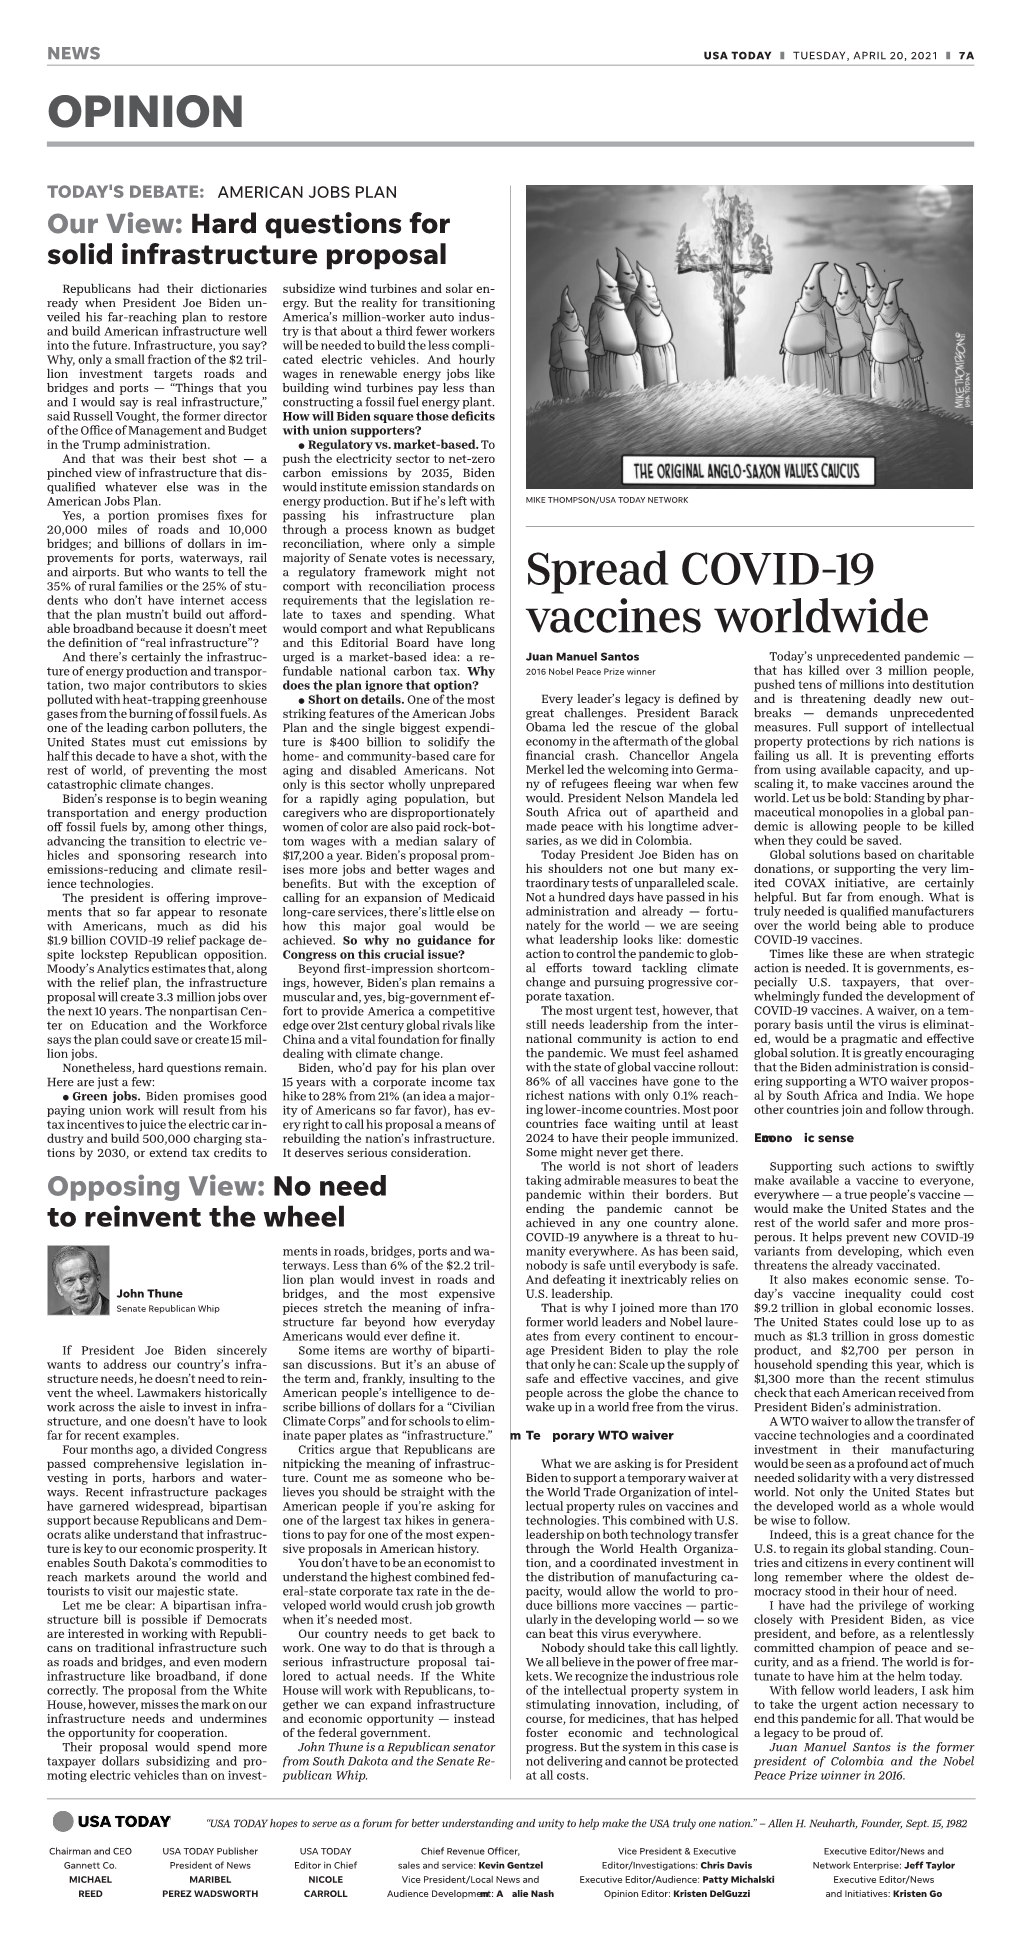 OPINION Spread COVID-19 Vaccines Worldwide